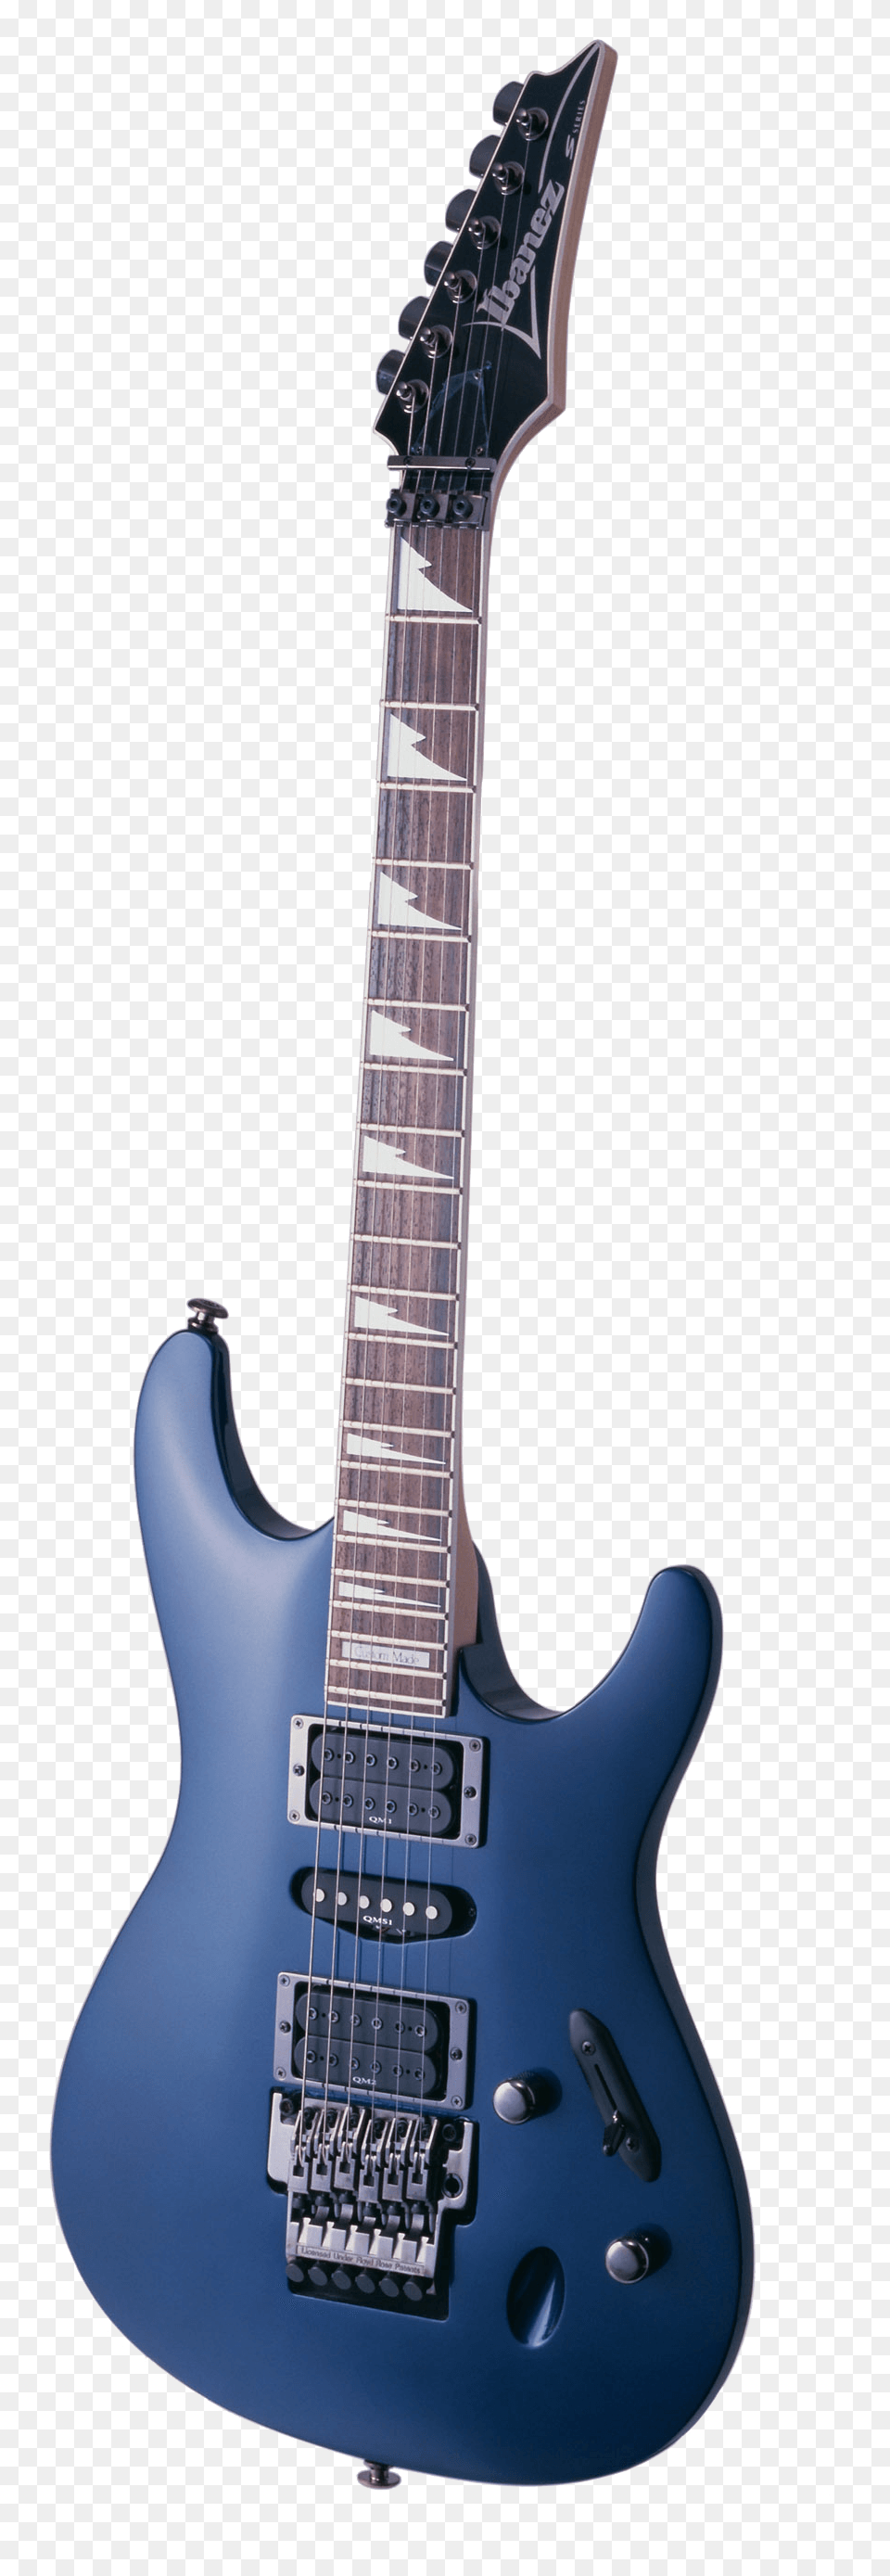 Guitar Image, Electric Guitar, Musical Instrument Png